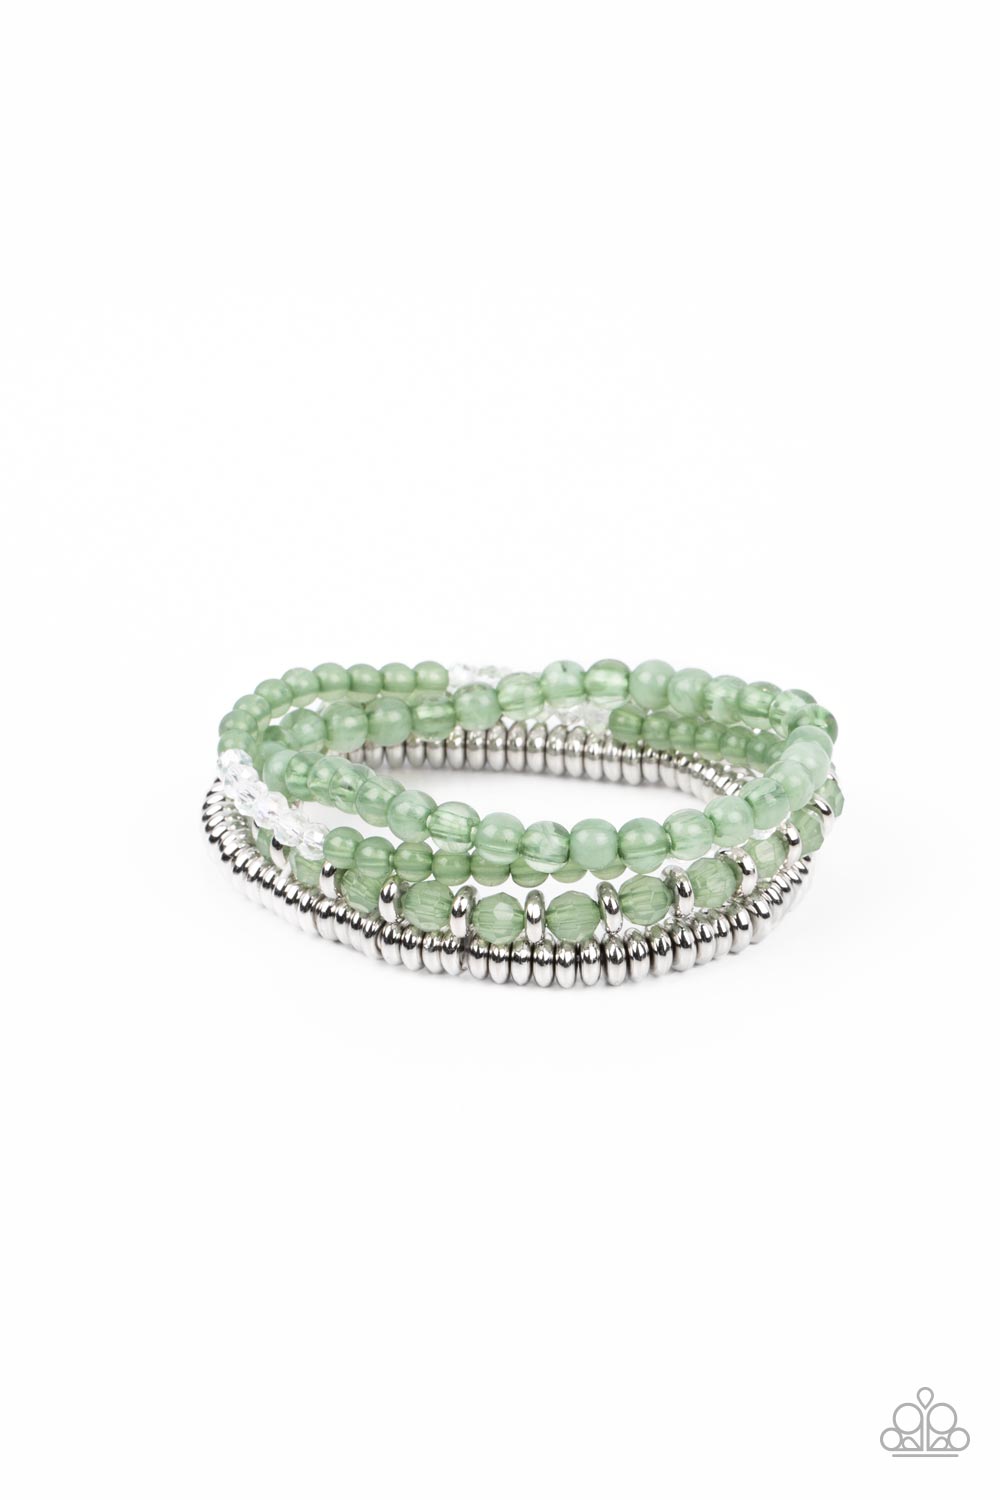 Destination Dreamscape Green Bracelet - Paparazzi Accessories- lightbox - CarasShop.com - $5 Jewelry by Cara Jewels